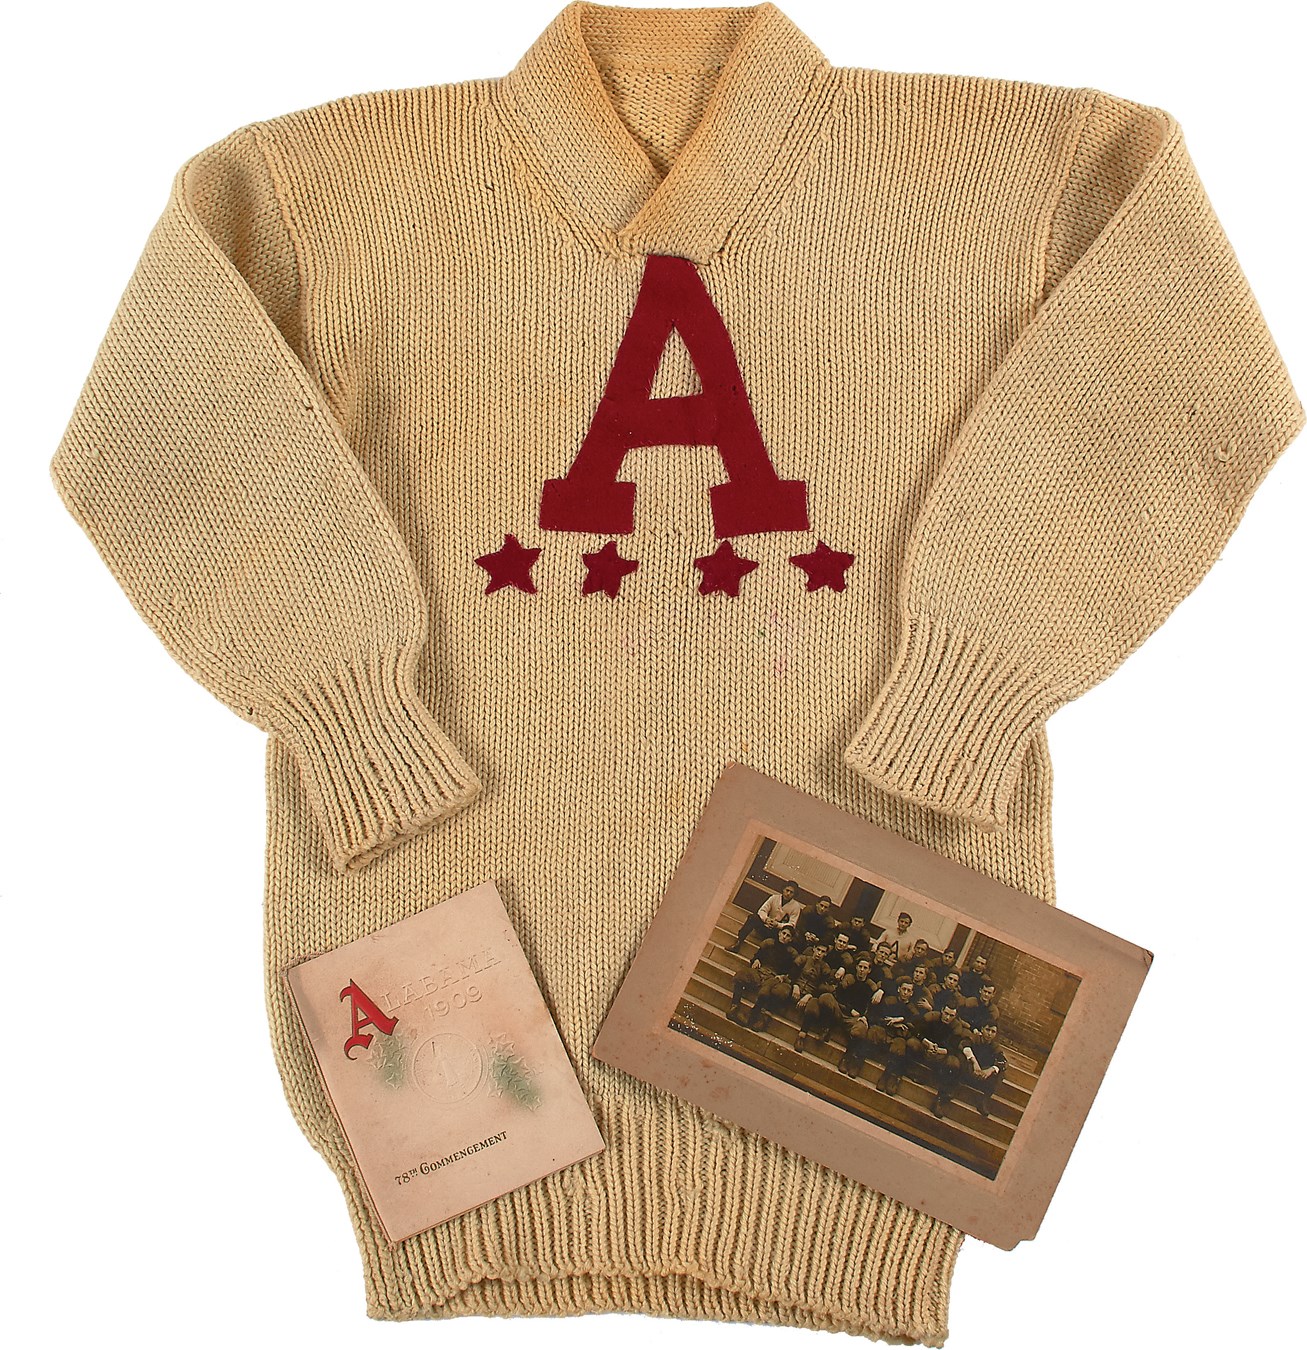 1909-10 U of Alabama Football Letterman's Sweater w/Vintage Photo Documentation